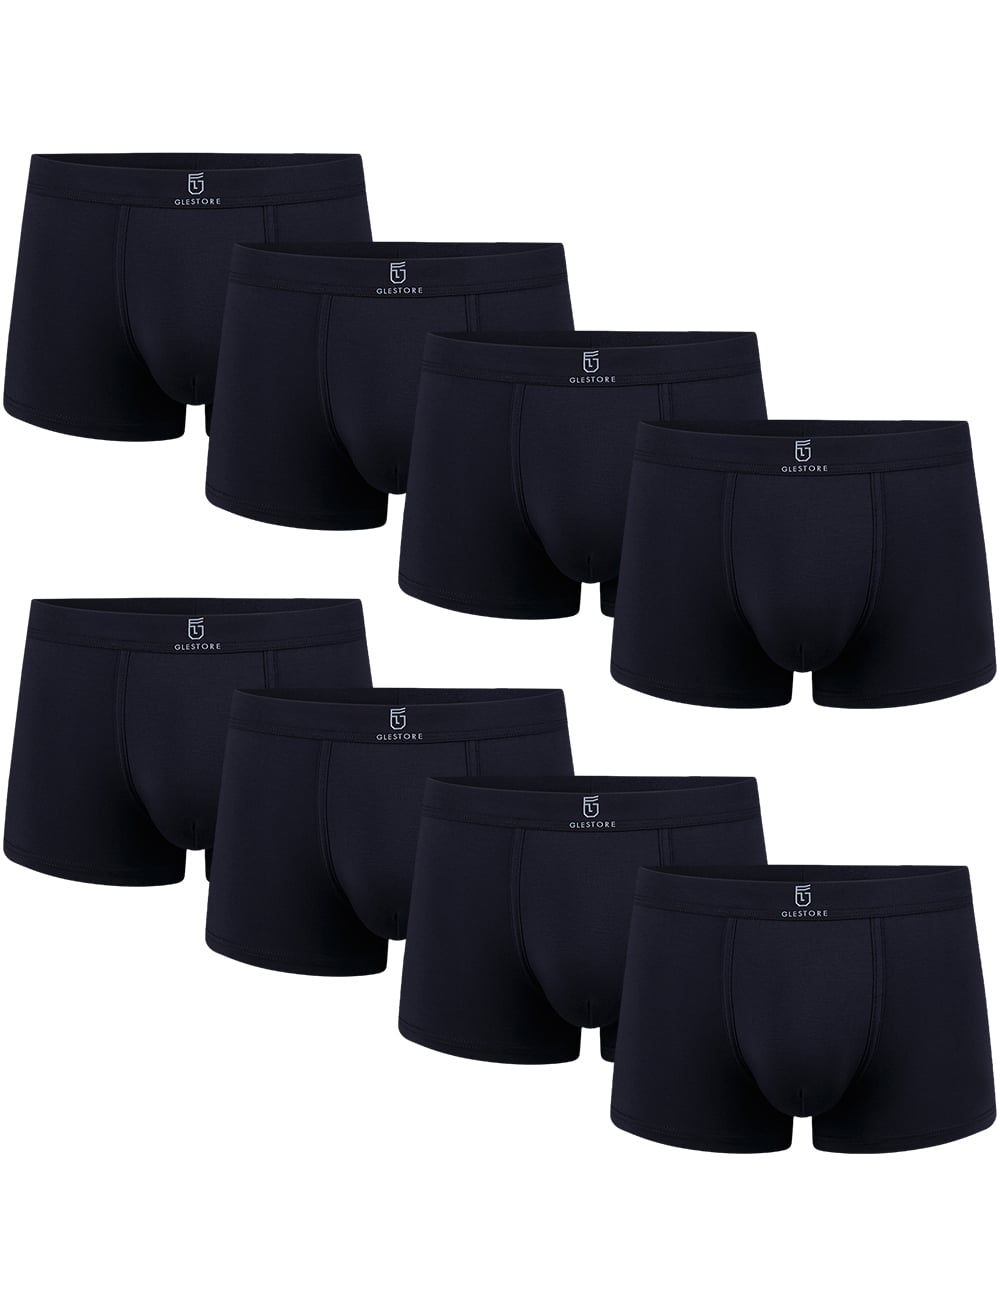 Glestore Men's 5 Boxer Shorts Elasticated Waist Breathable Underwear Grey Large